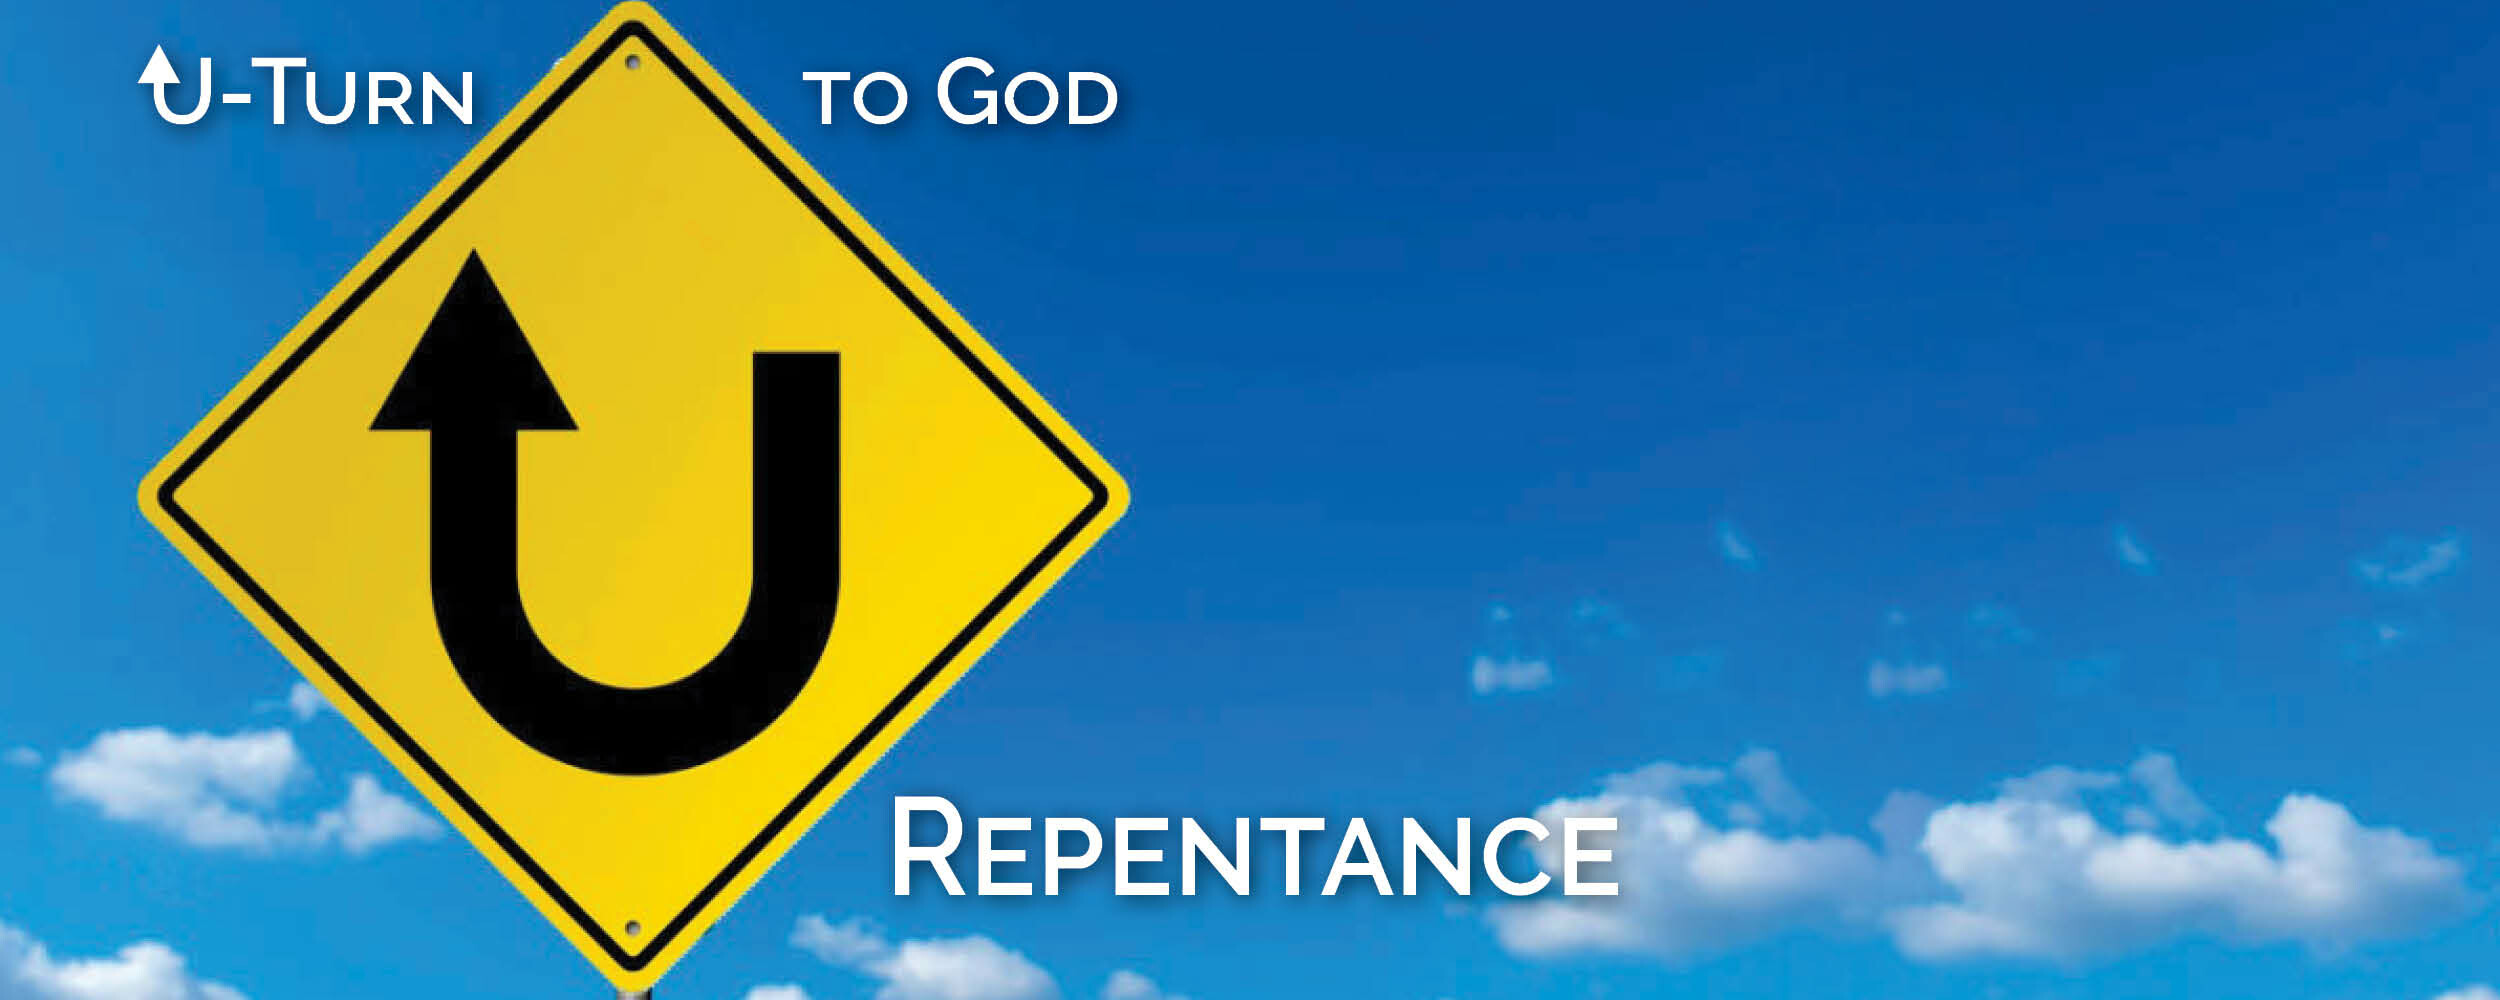 U-Turn to God, Repentance, Children's Message